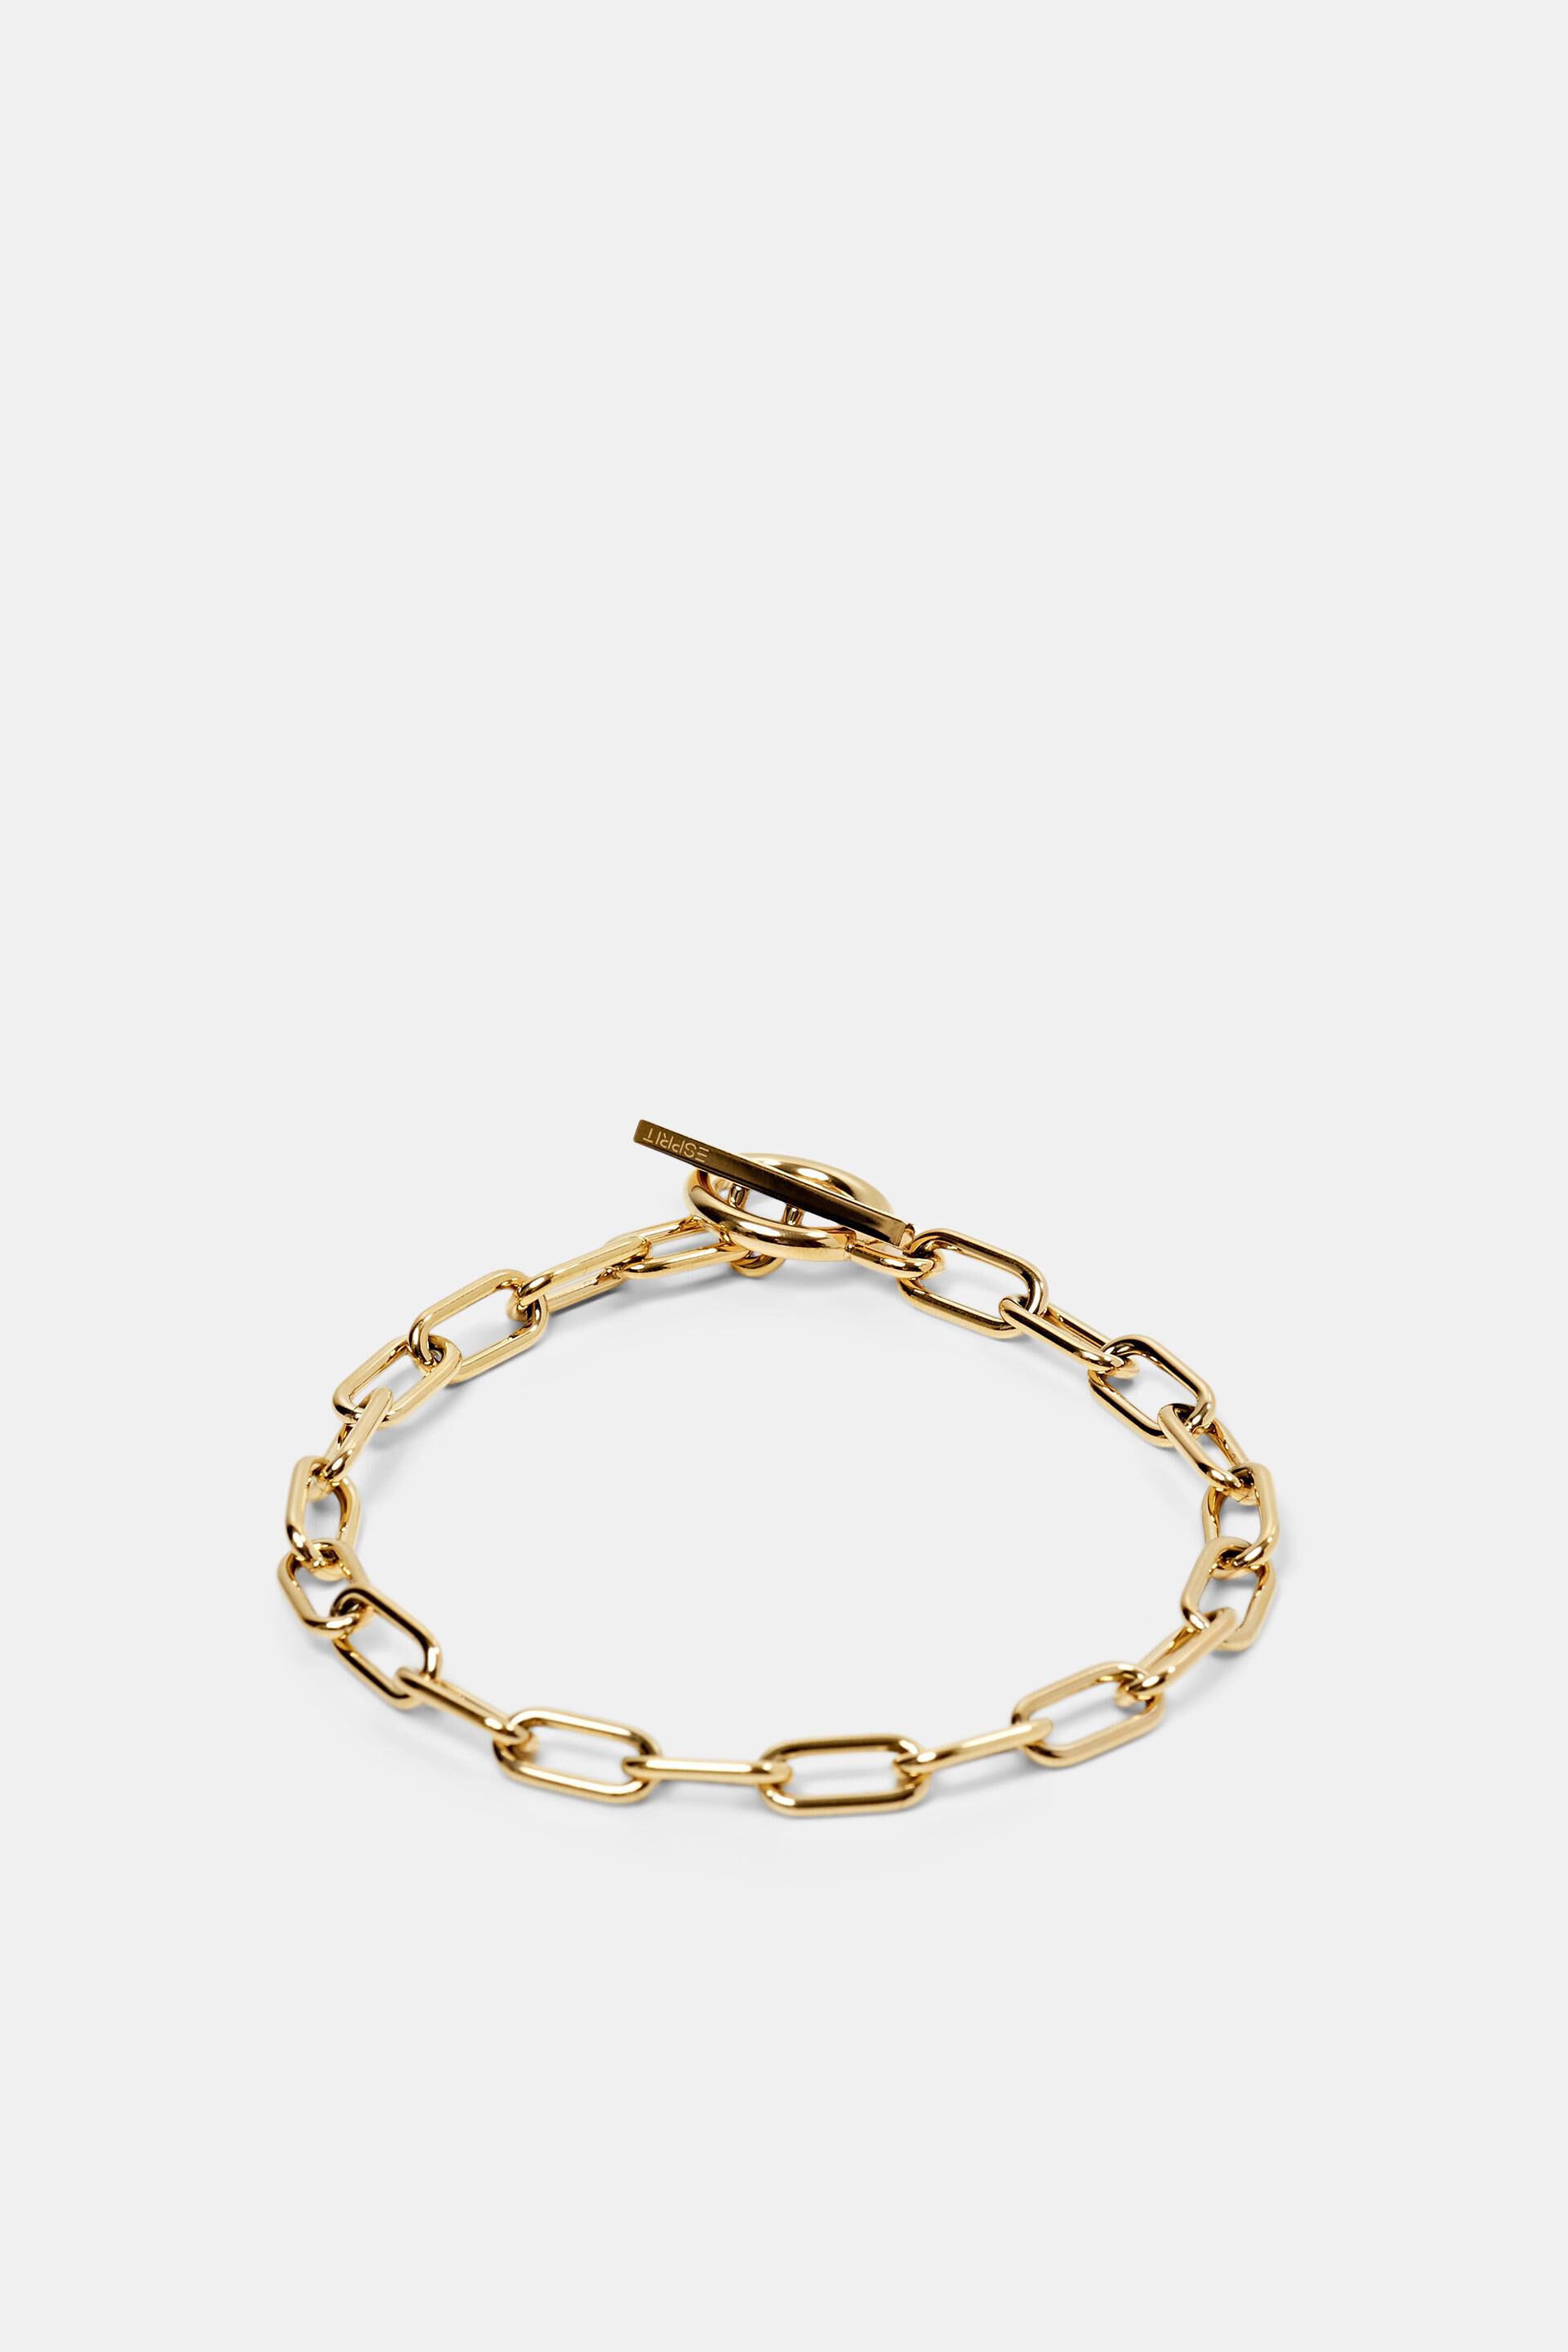 Esprit bracelet, Chain stainless steel